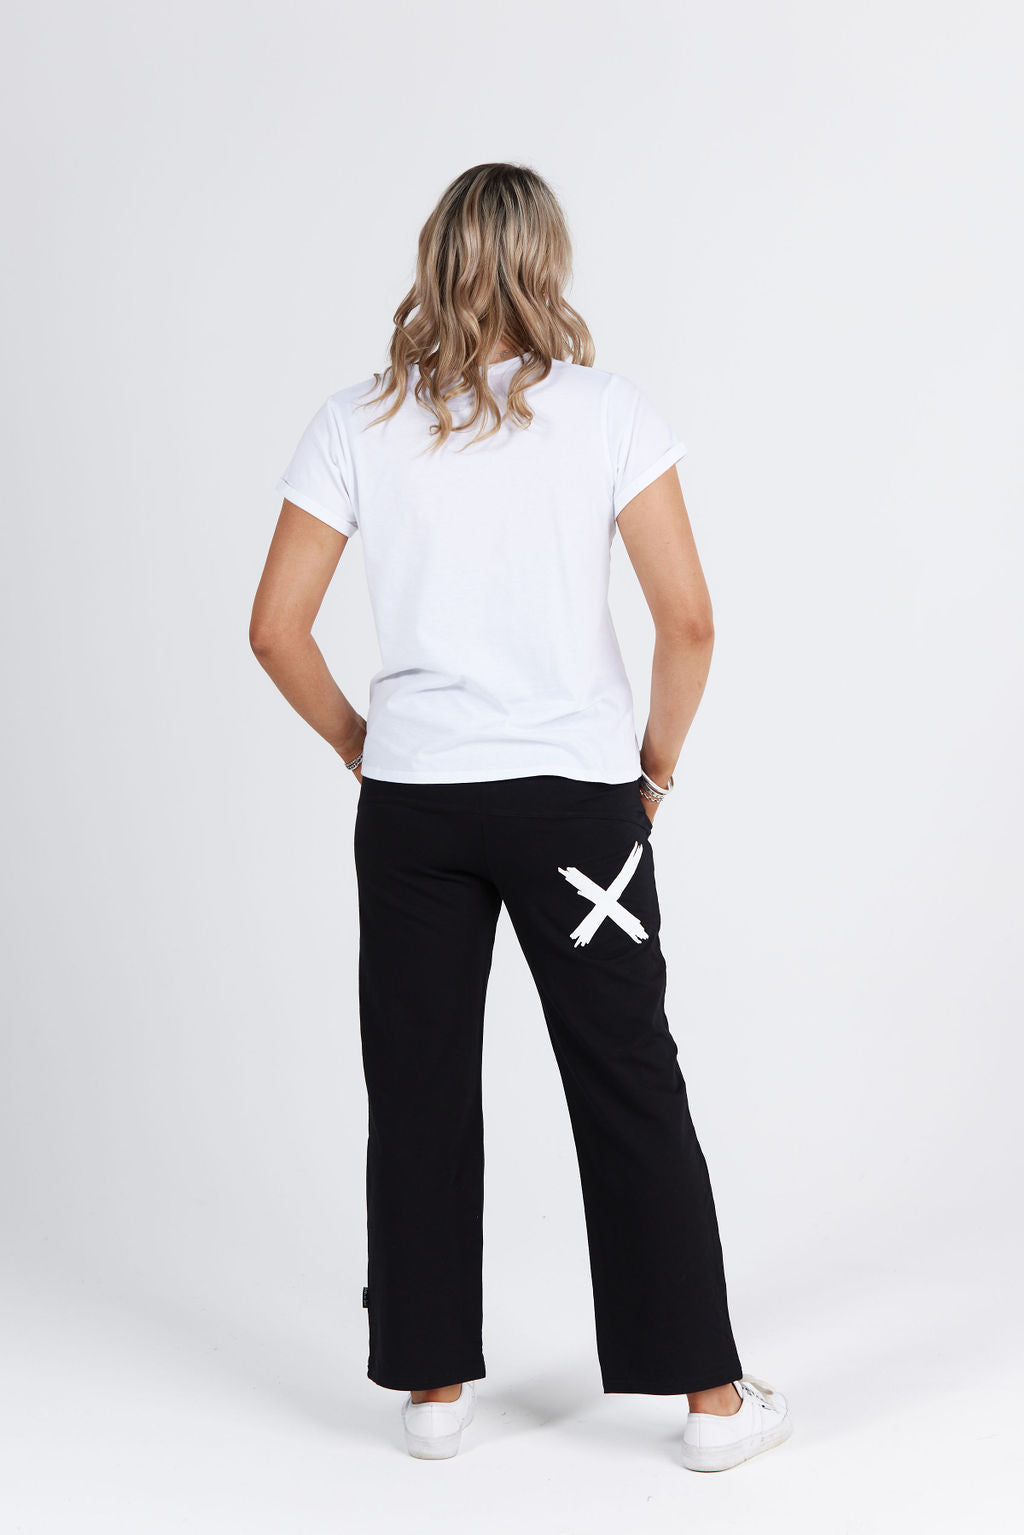 Avenue Pants Black with White X